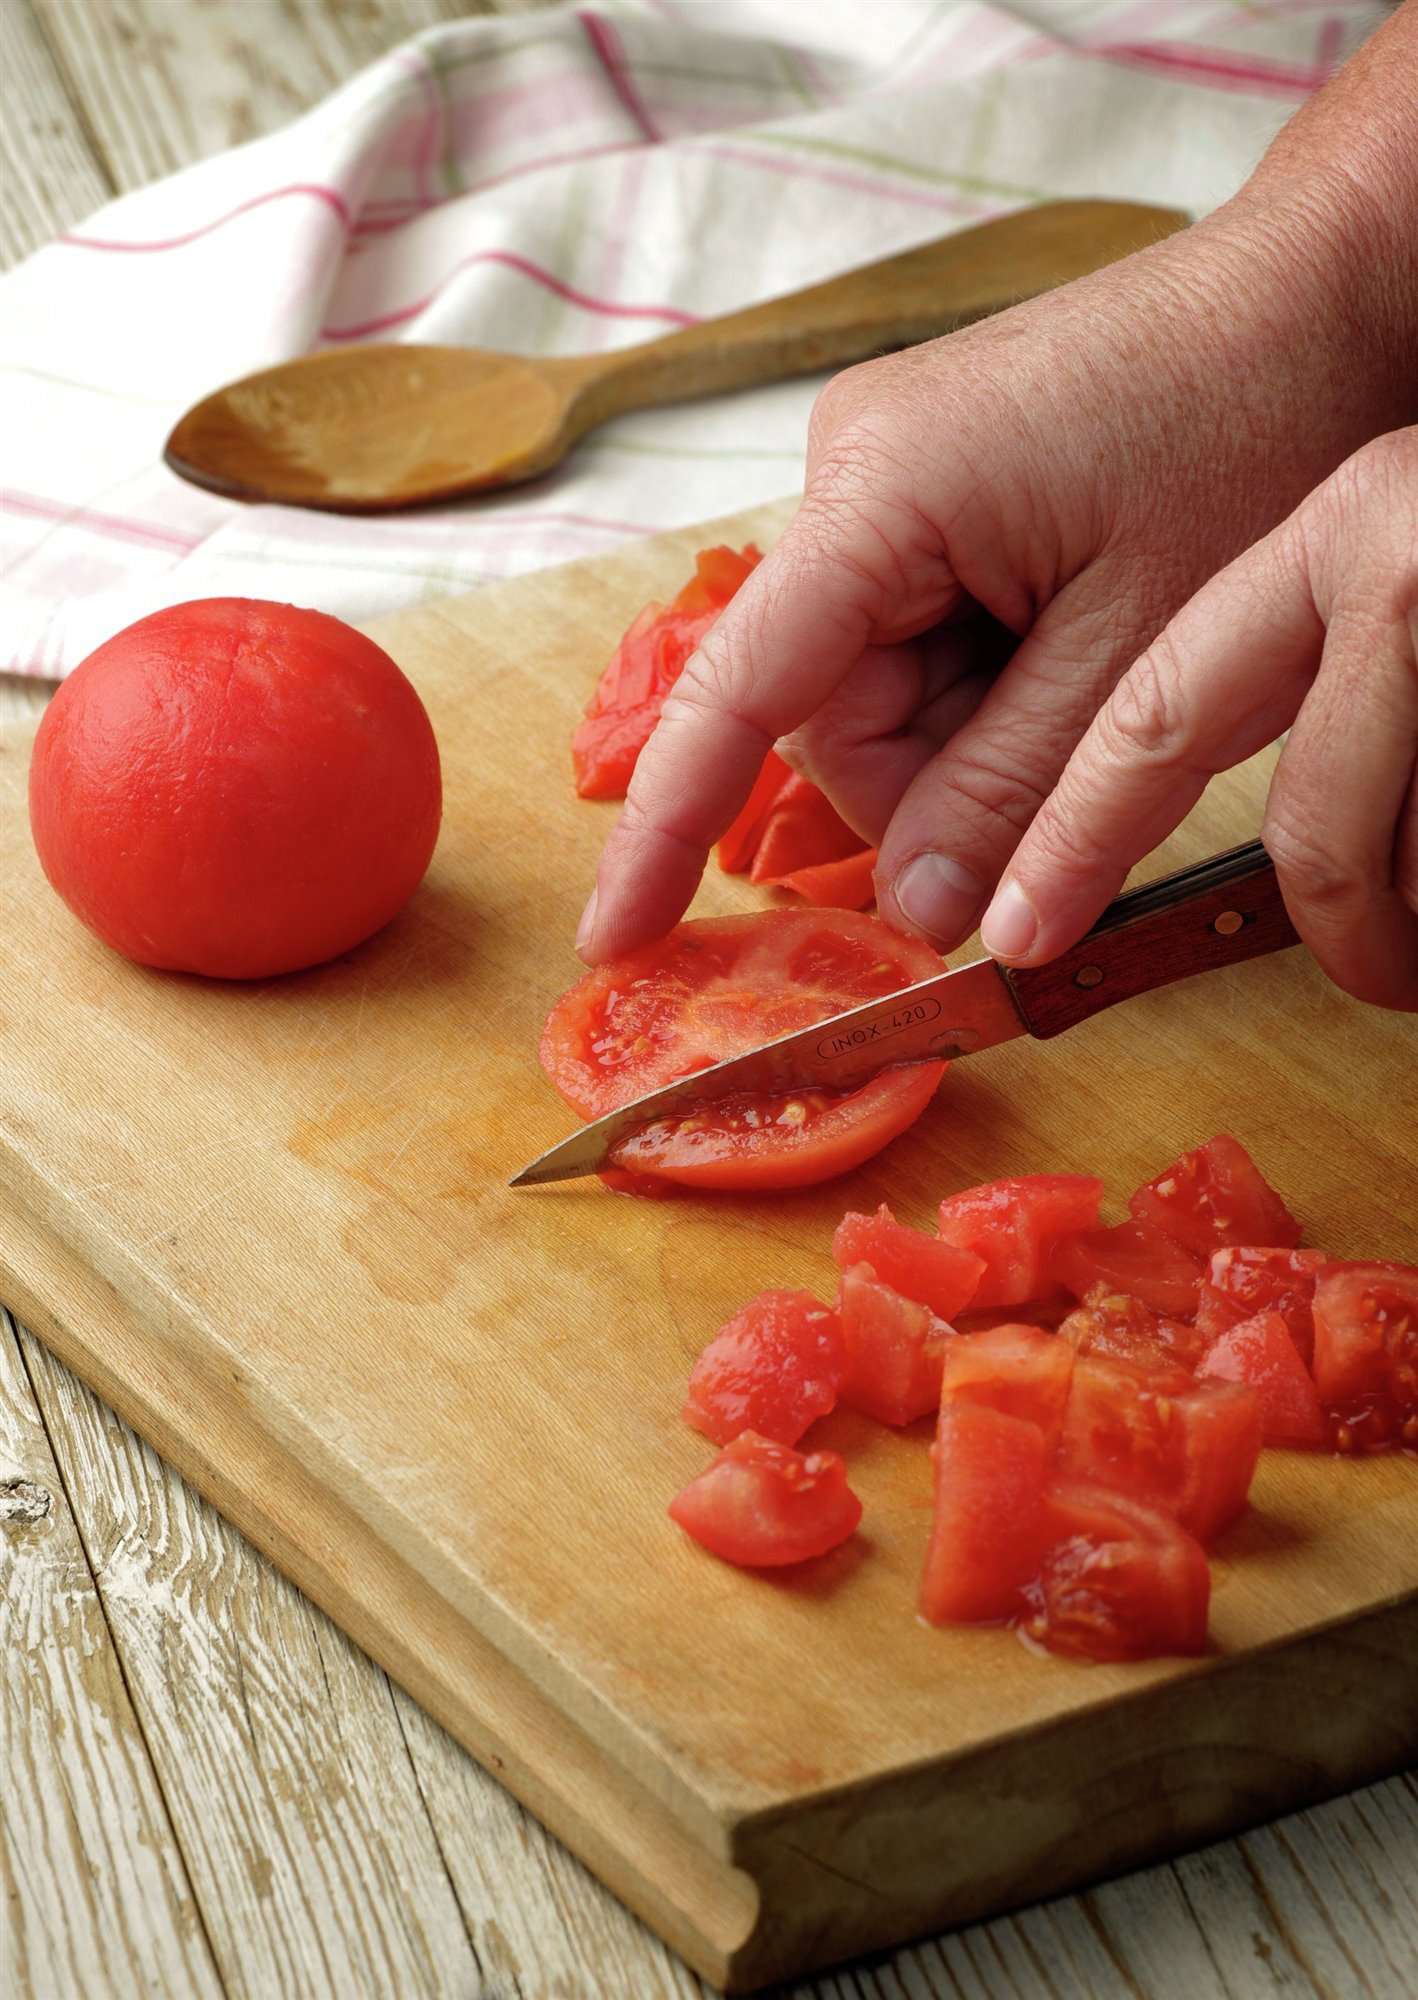 1. Corta el tomate